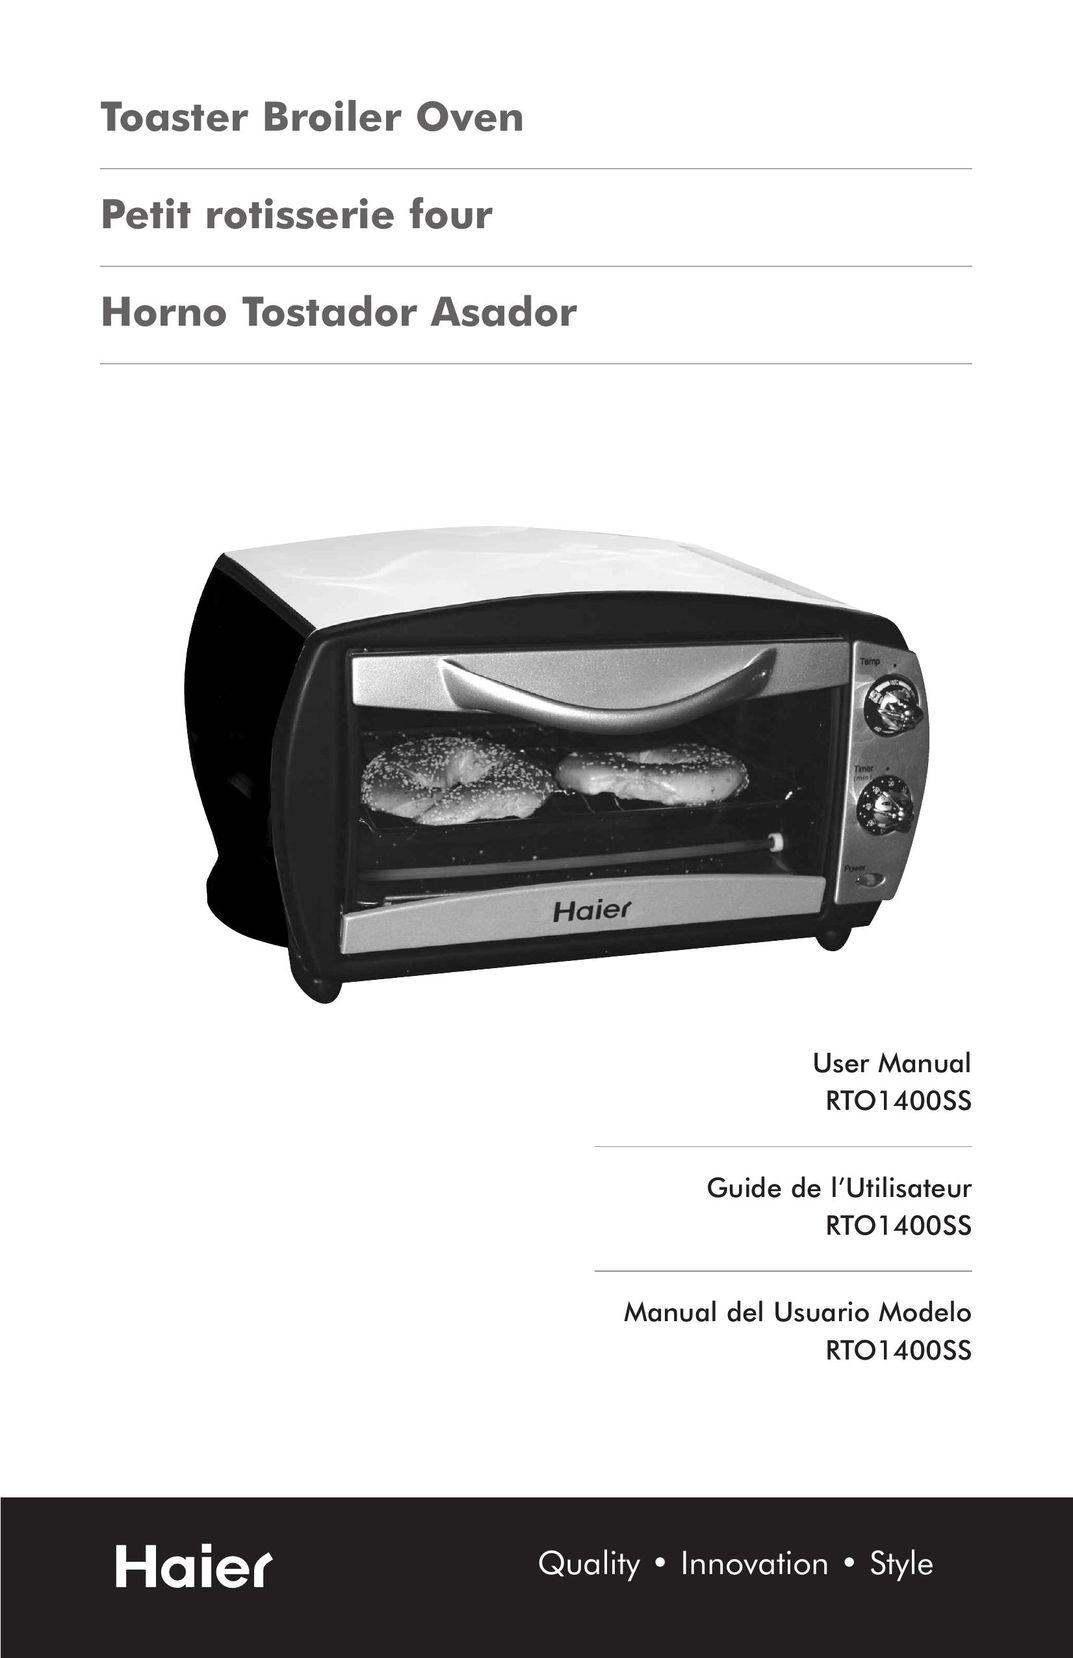 Haier RTO1400SS Oven User Manual